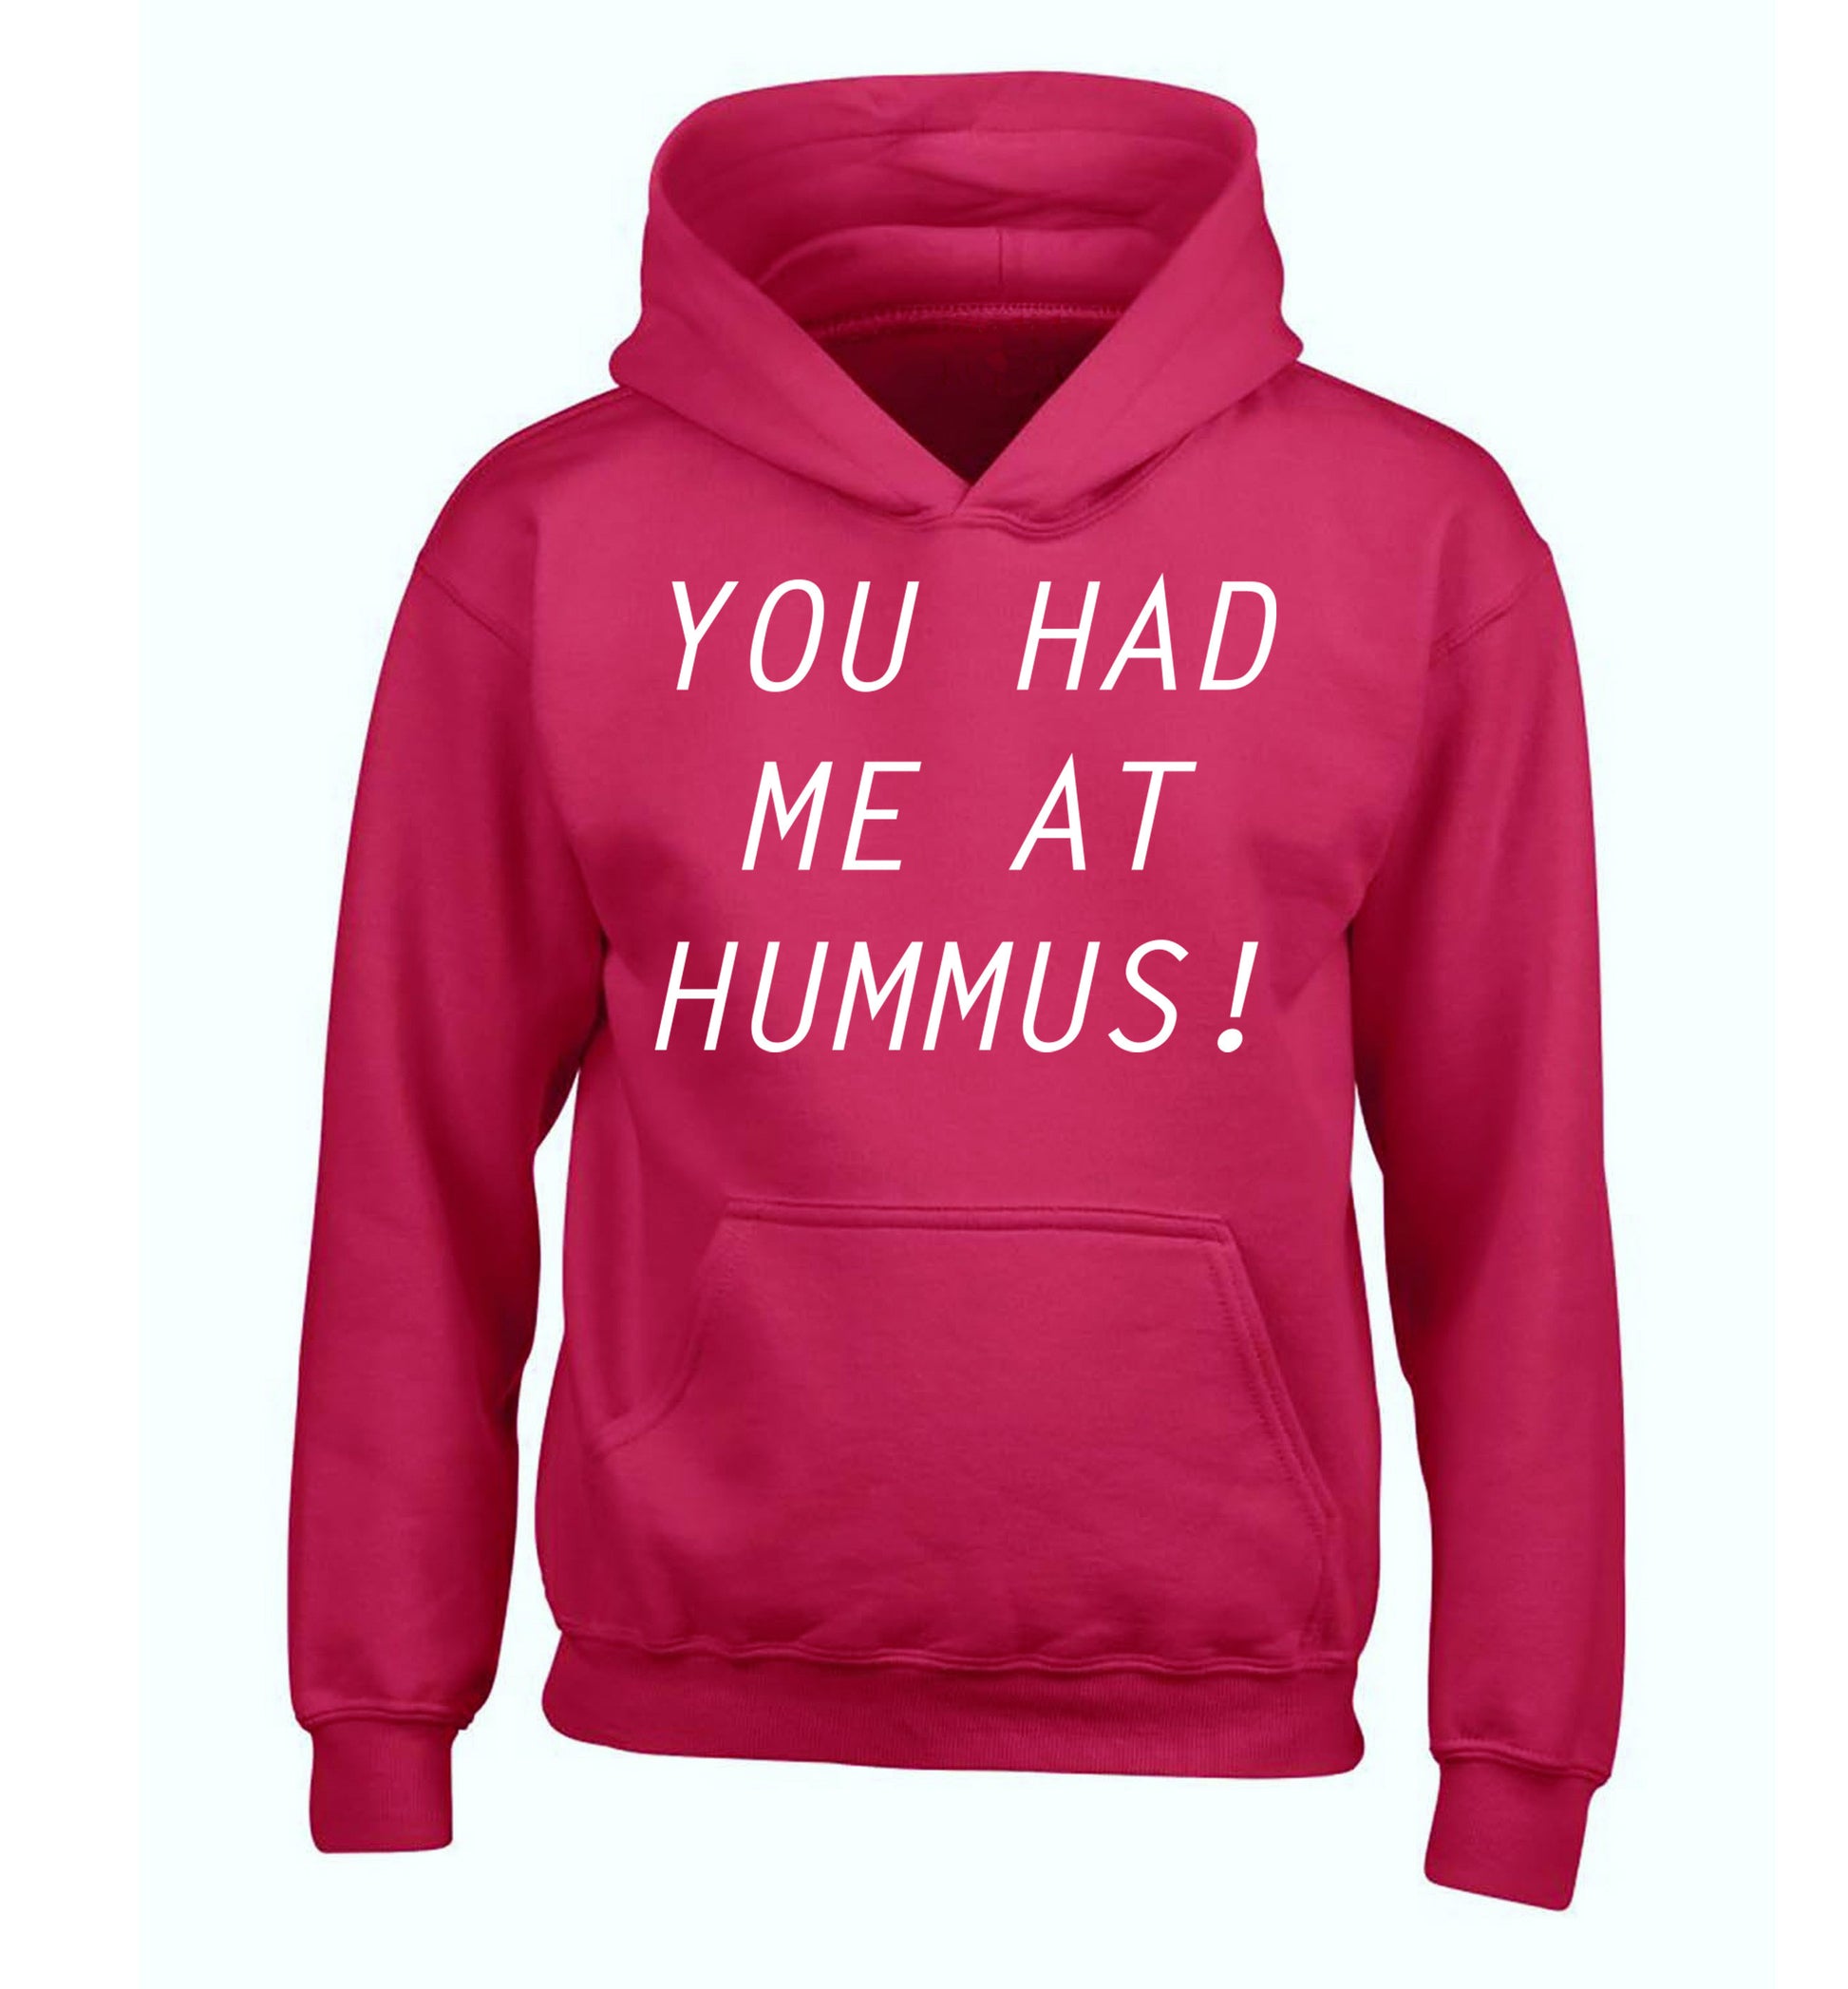 You had me at hummus children's pink hoodie 12-14 Years